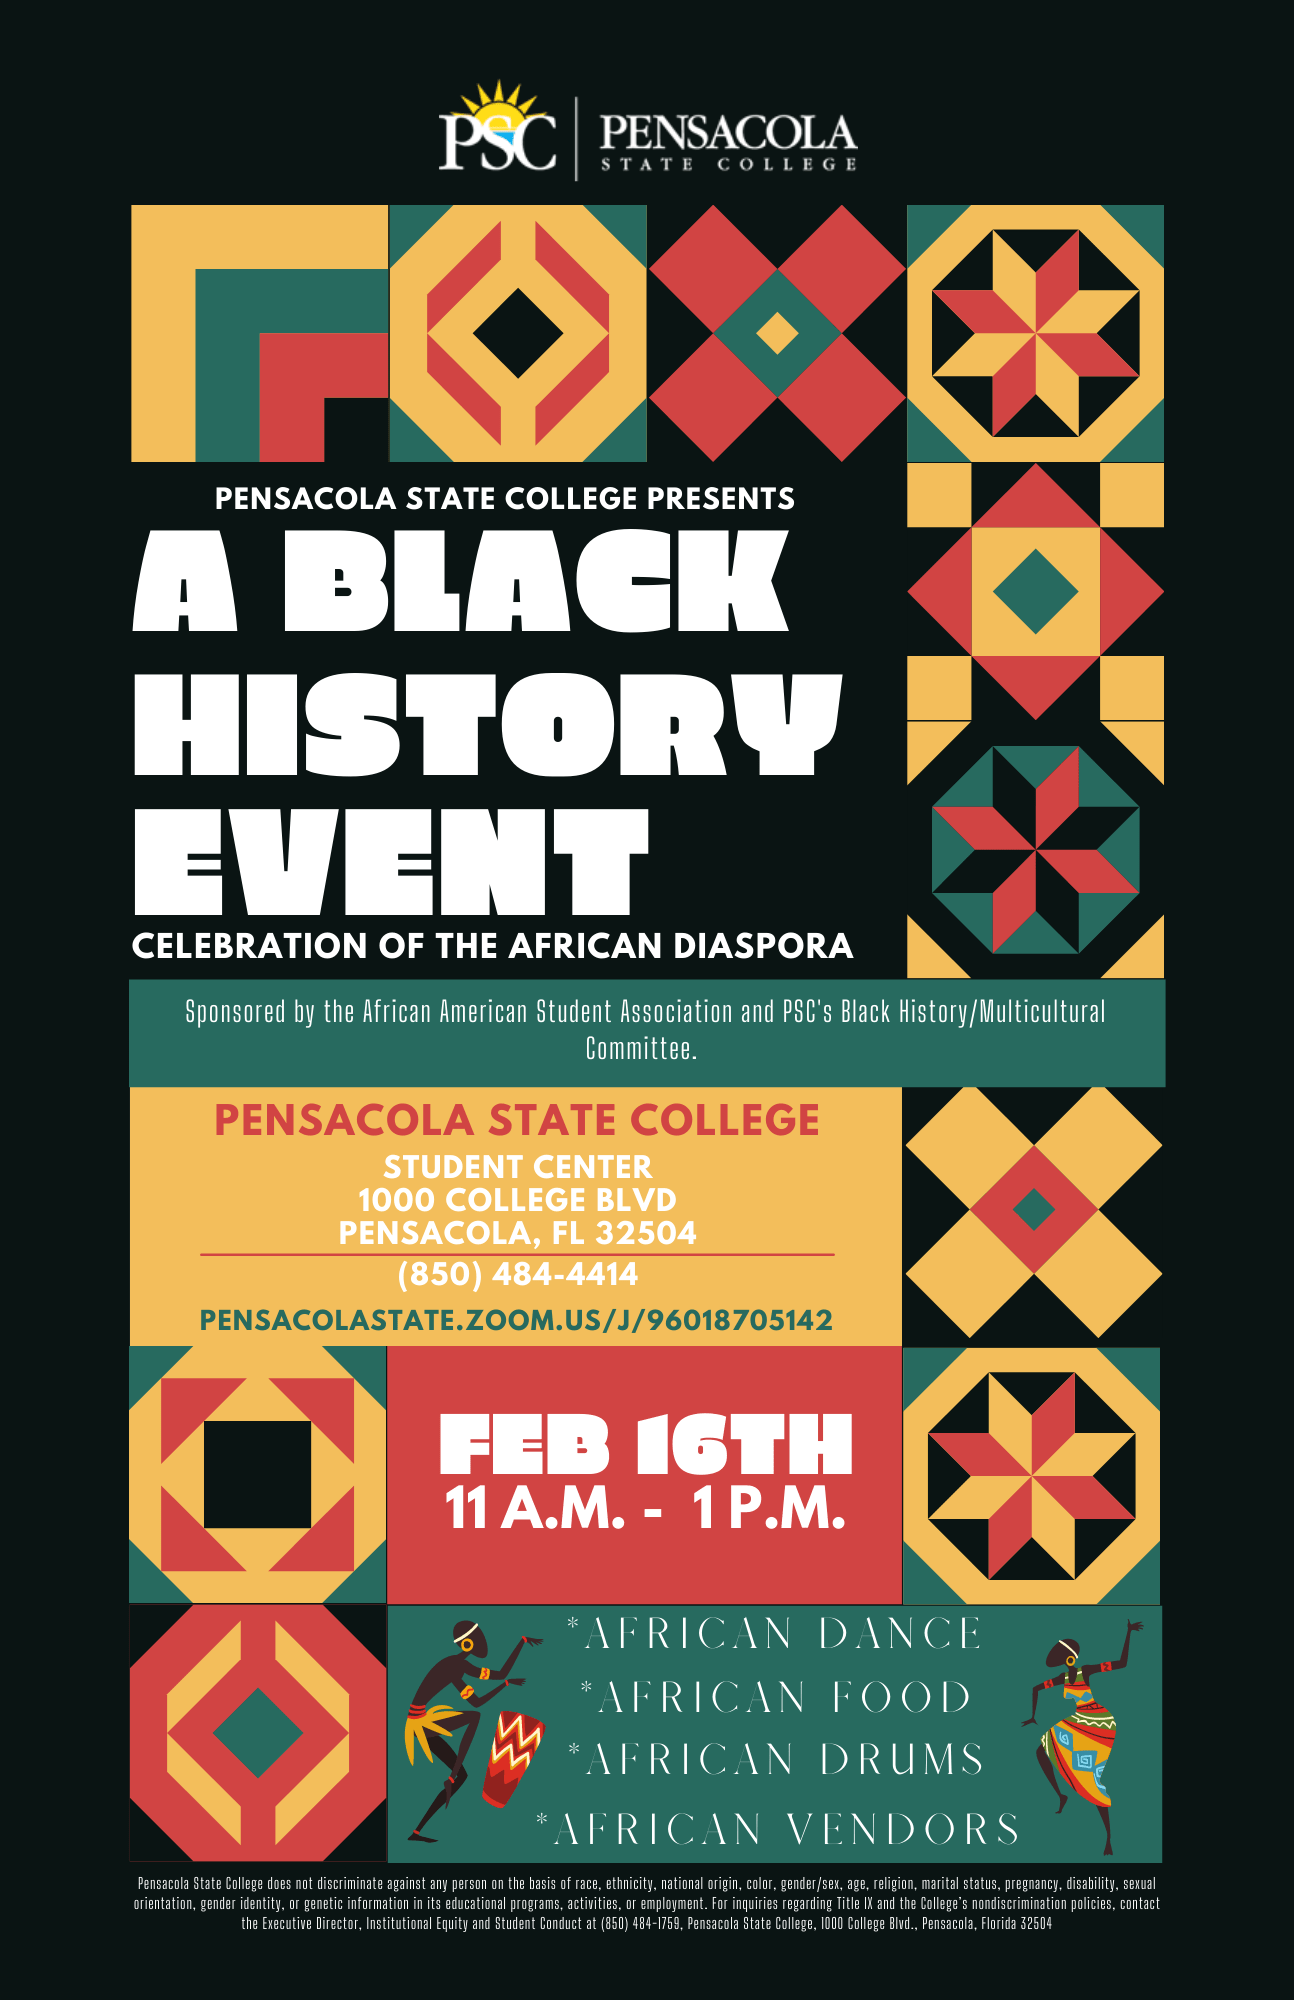 decorative image of BlackHistoryEvent2022 , PSC African-American Student Association hosts African Diaspora commemoration as part of Black History Celebration on Feb. 16 2022-01-26 11:33:56